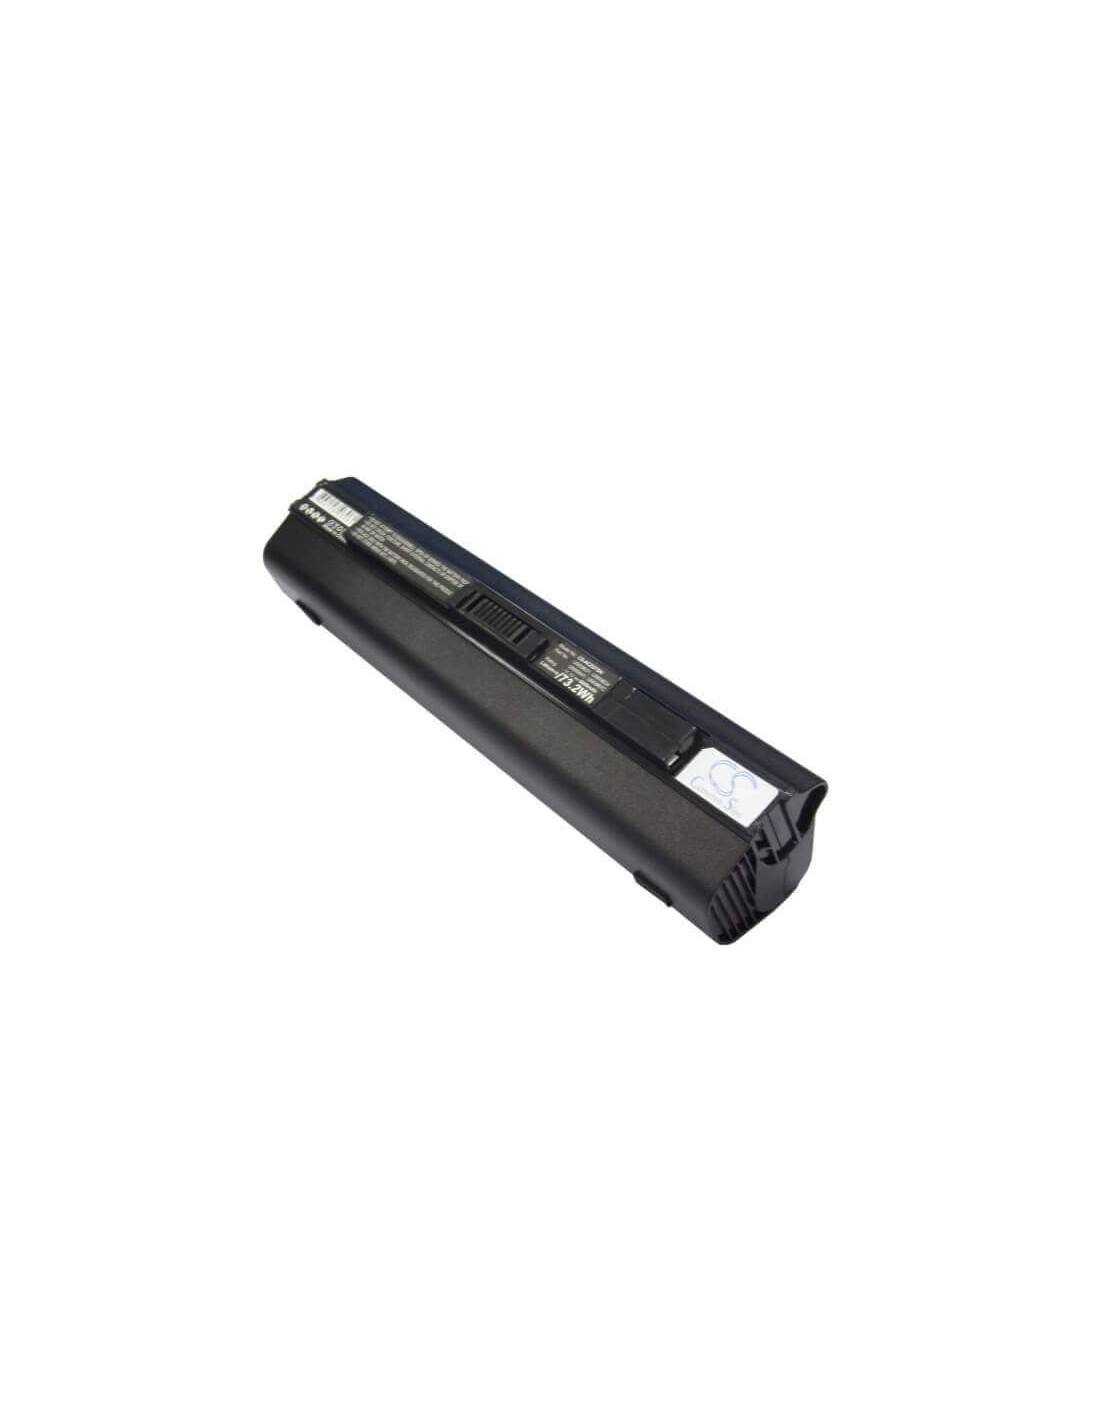 Black Battery for Acer Aspire One 531, Aspire One 751, Aspire One 751-bk23 11.1V, 6600mAh - 73.26Wh